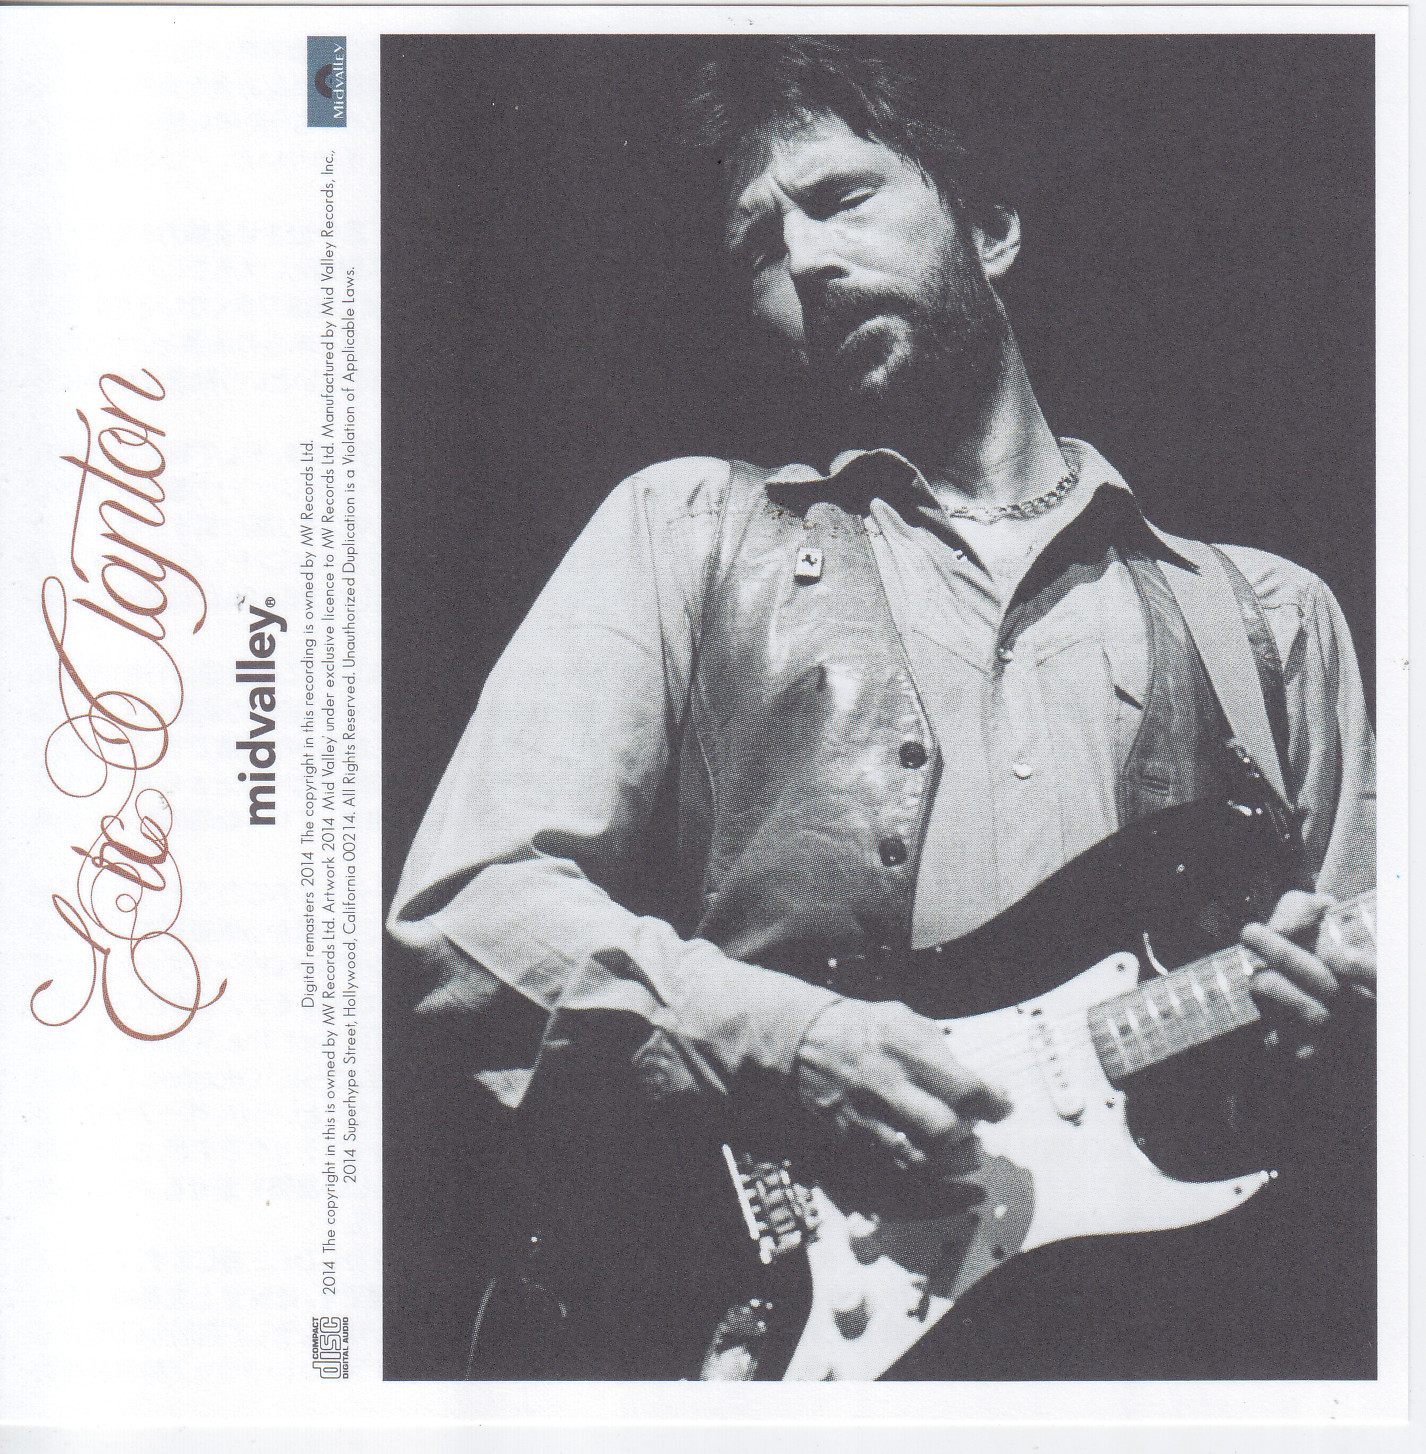 Eric Clapton / Convention Center Sacramento 6 February 1983 / 2CD 